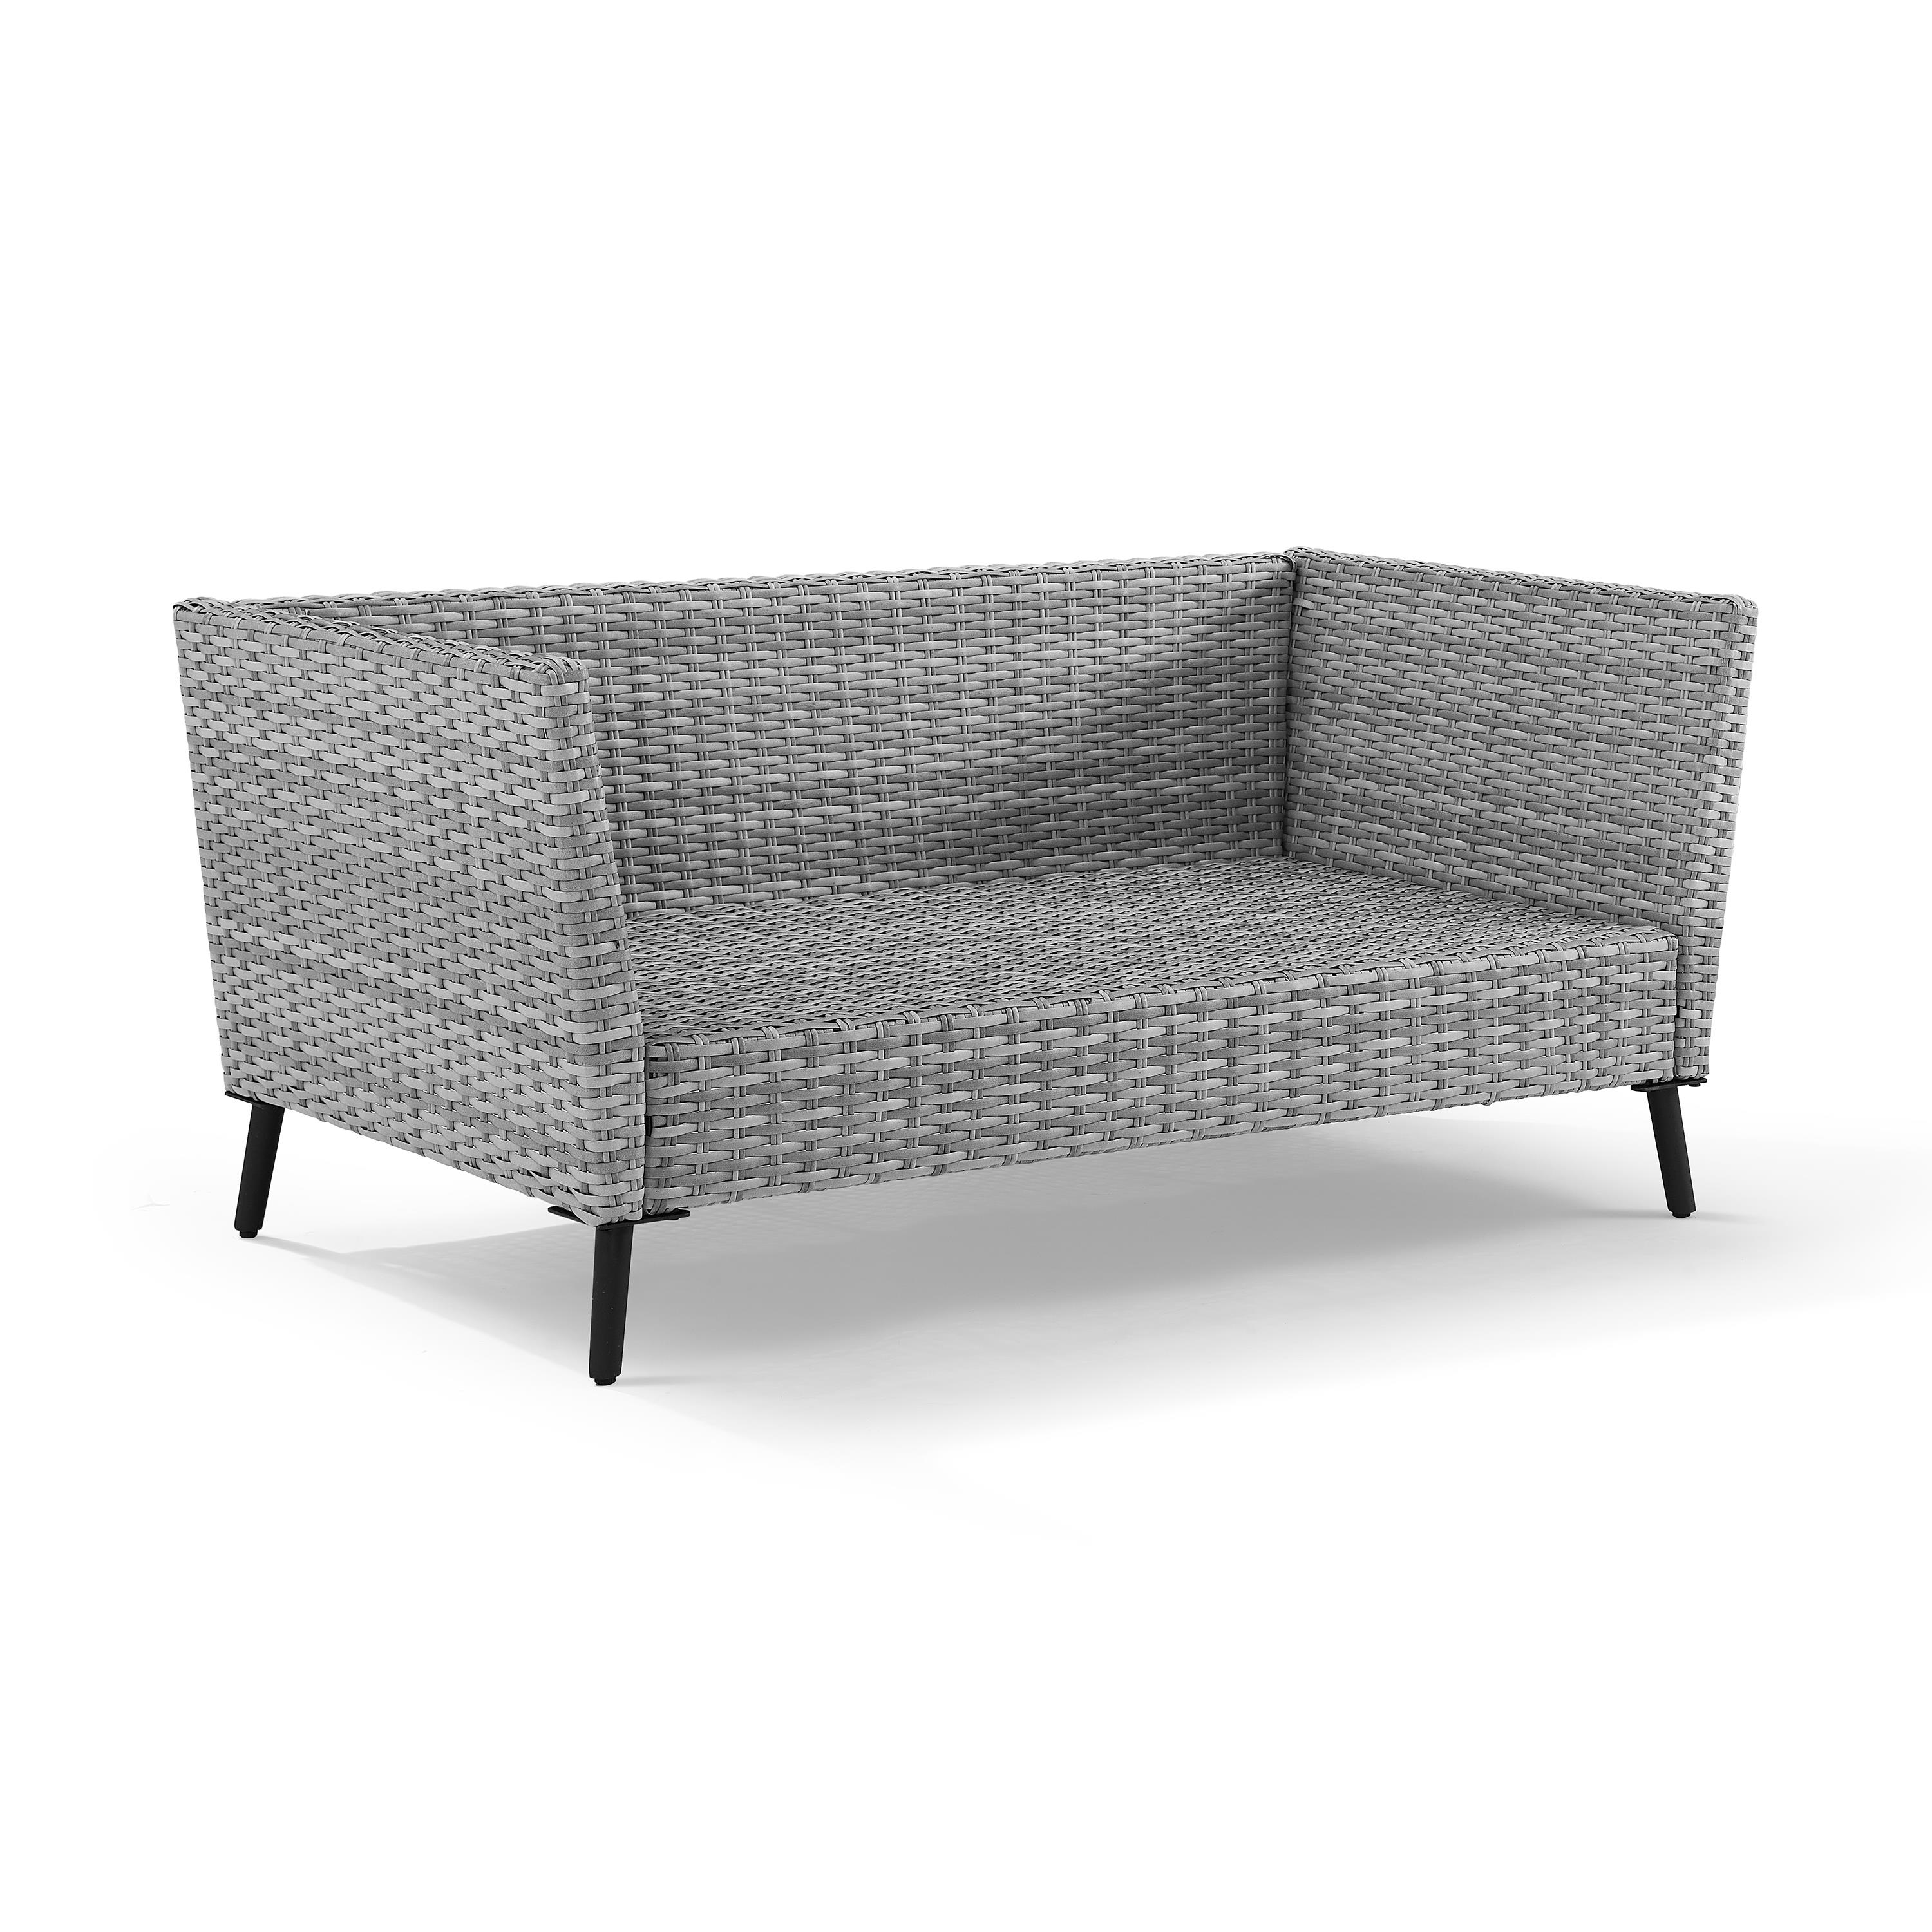 Crosley Richland 2 Piece Wicker Patio Sofa Set in Gray - image 4 of 10